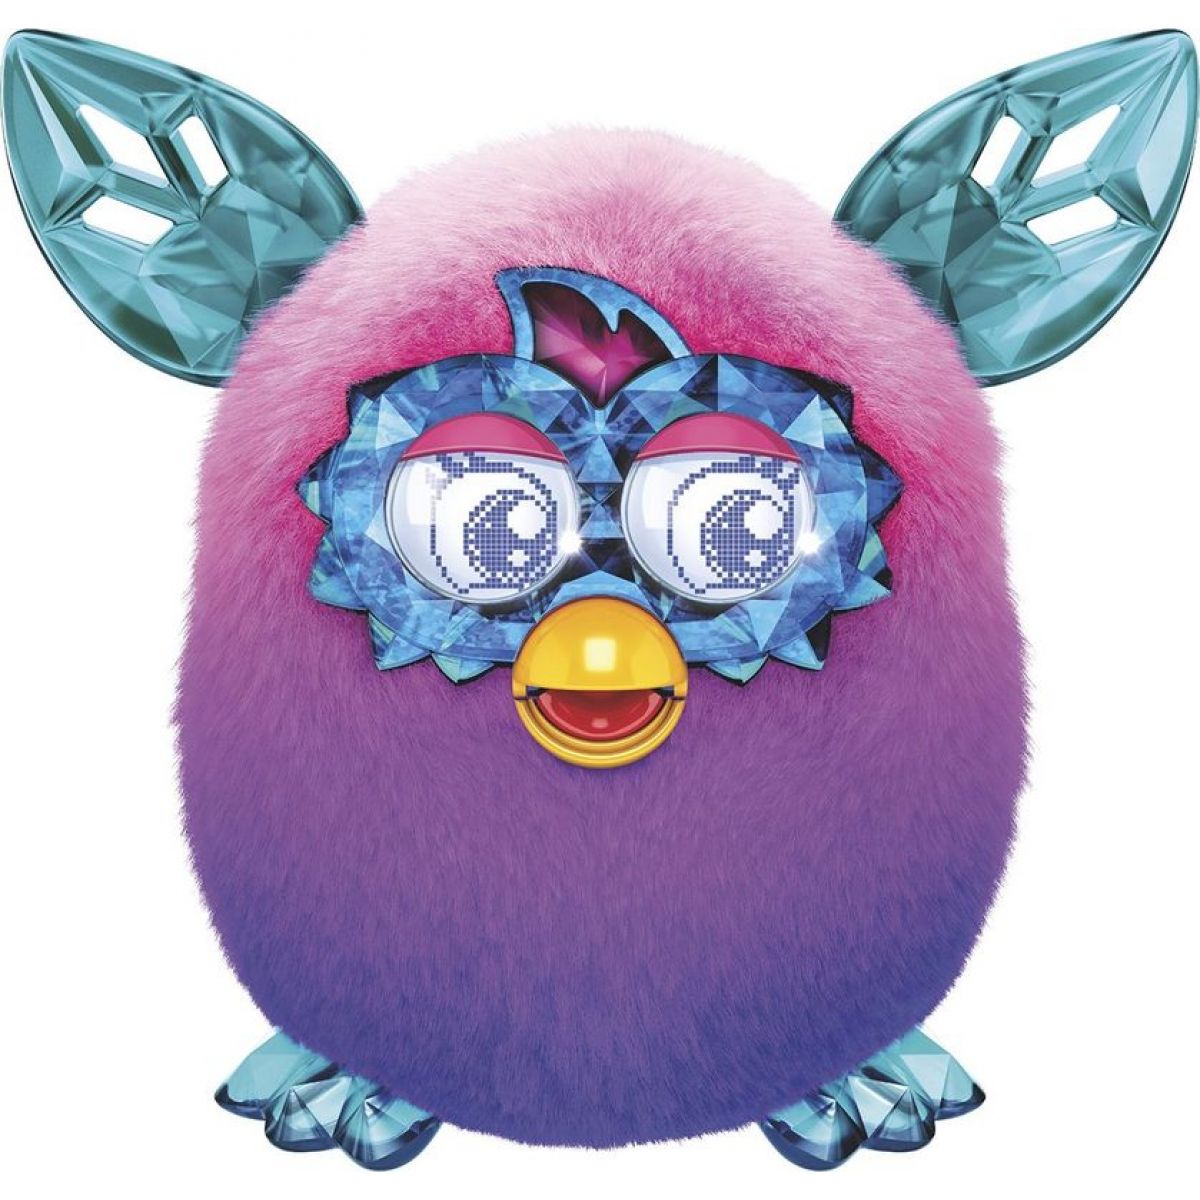 Furby Boom Sweet - A9614